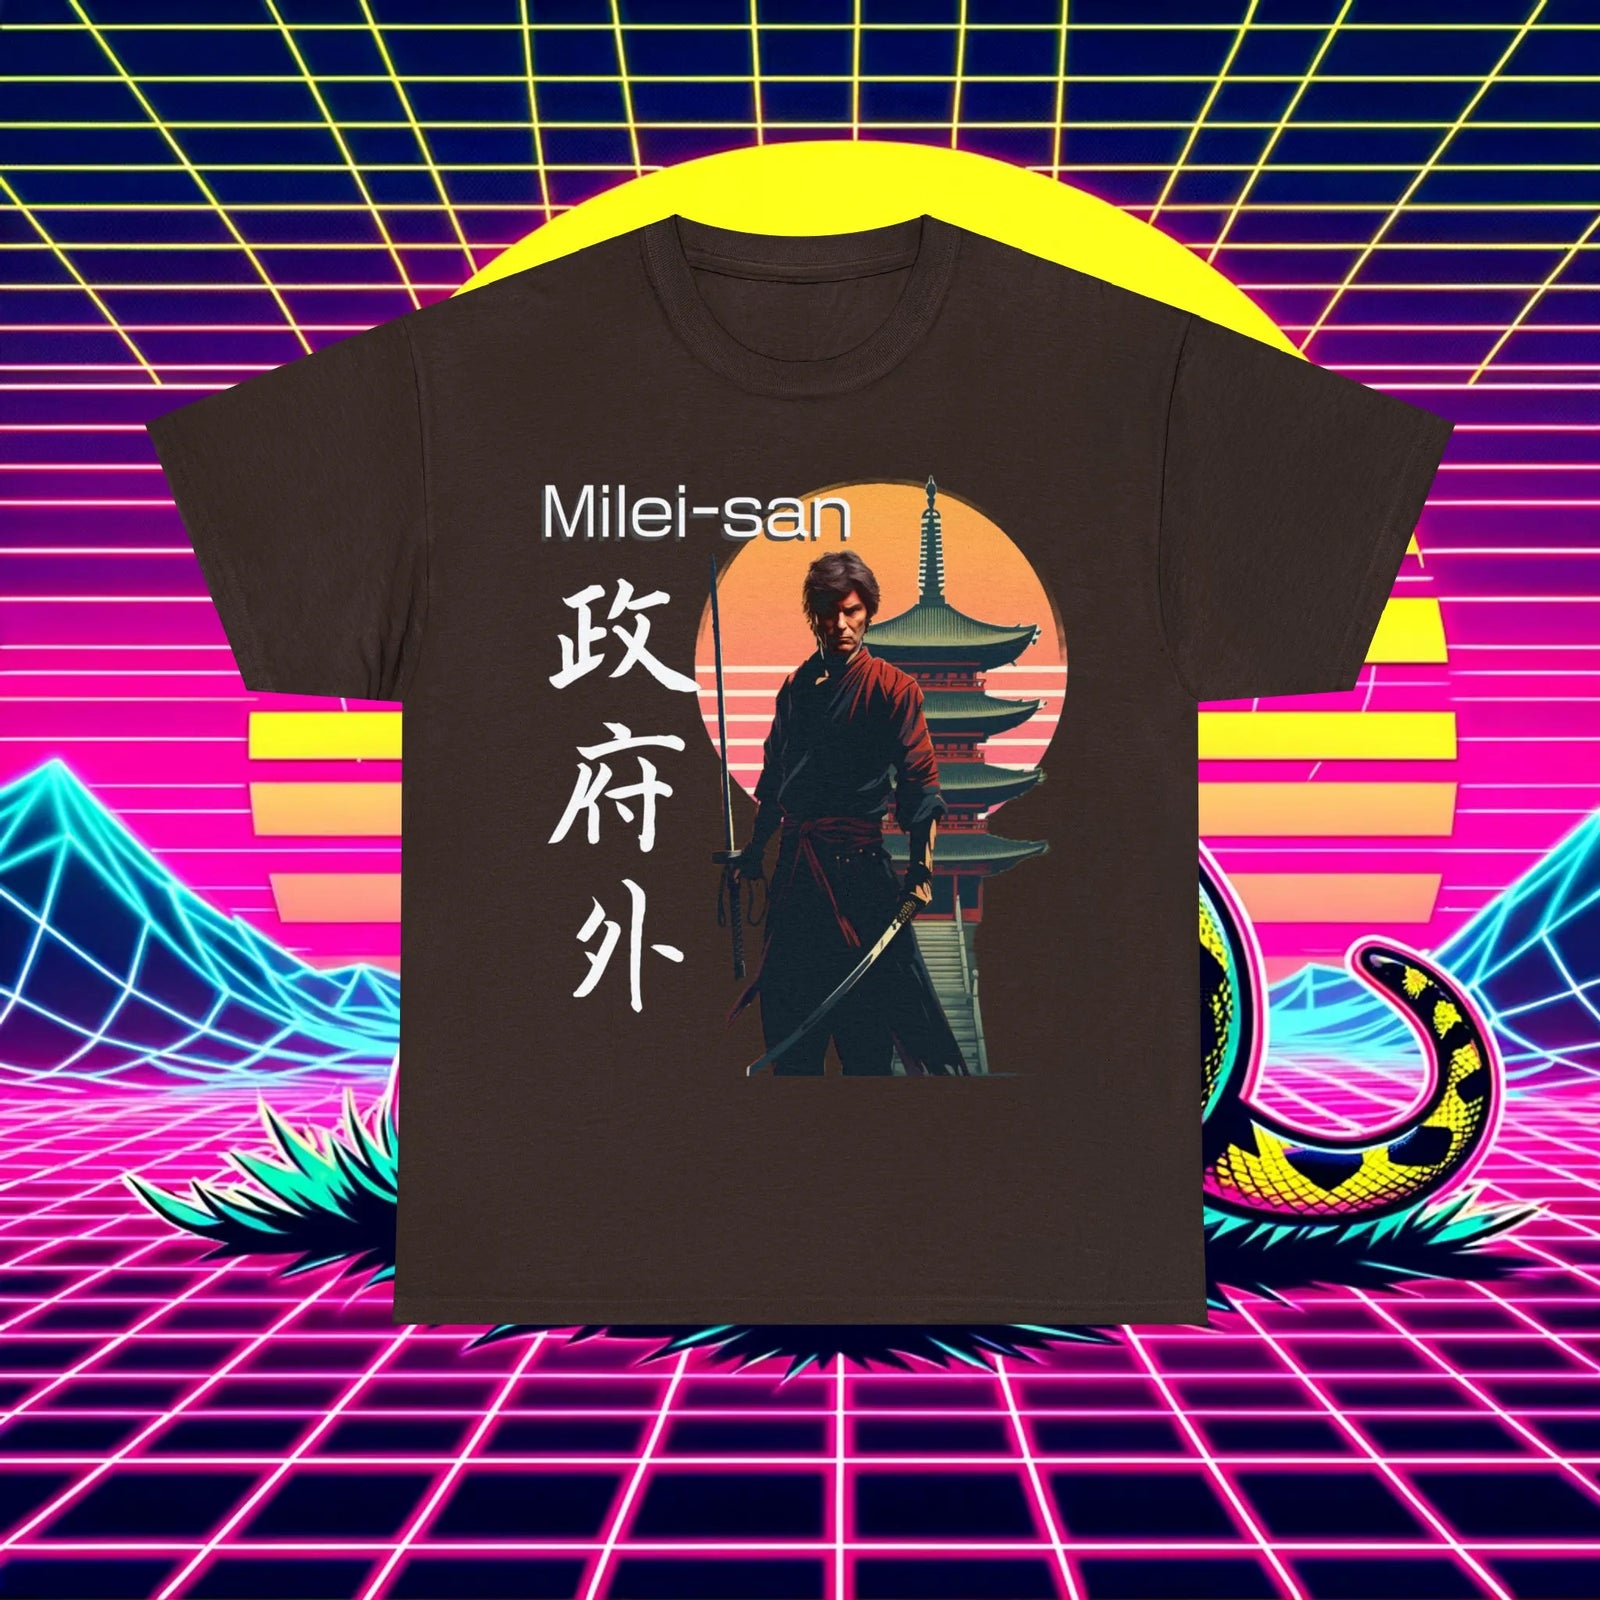 Shogun of Liberty: Milei-San Samurai Shirt